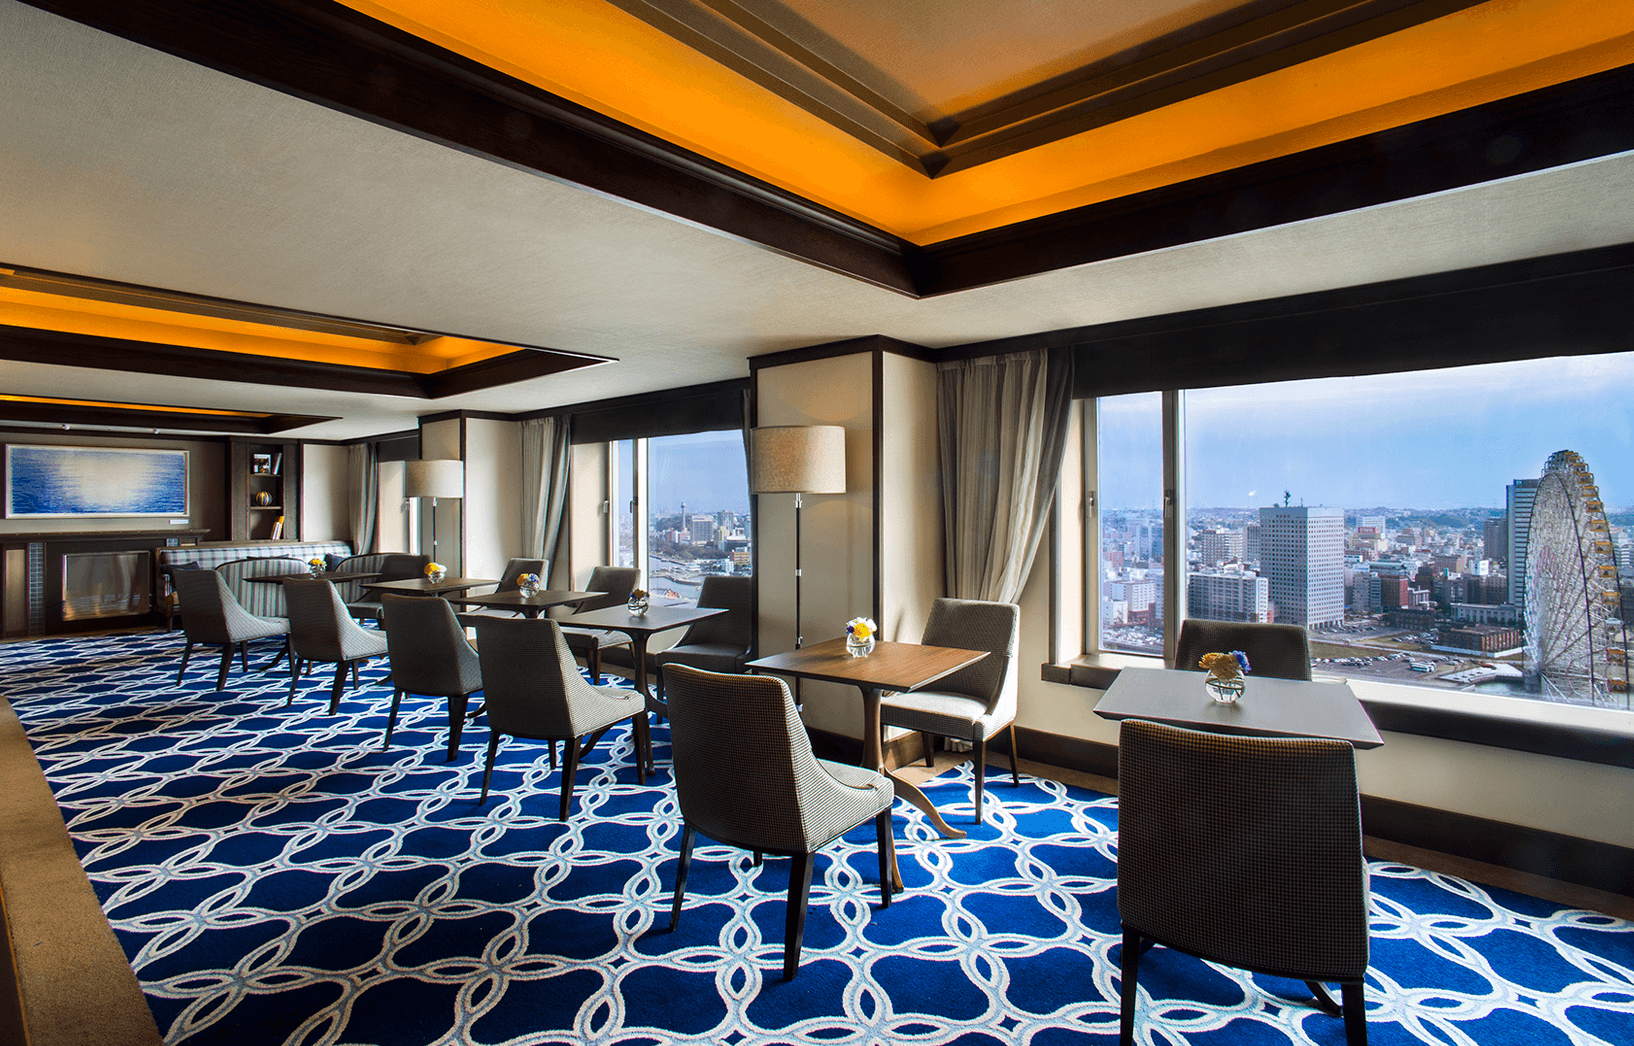 Club Intercontinental Luxury Hotel In Minatomirai Yokohama